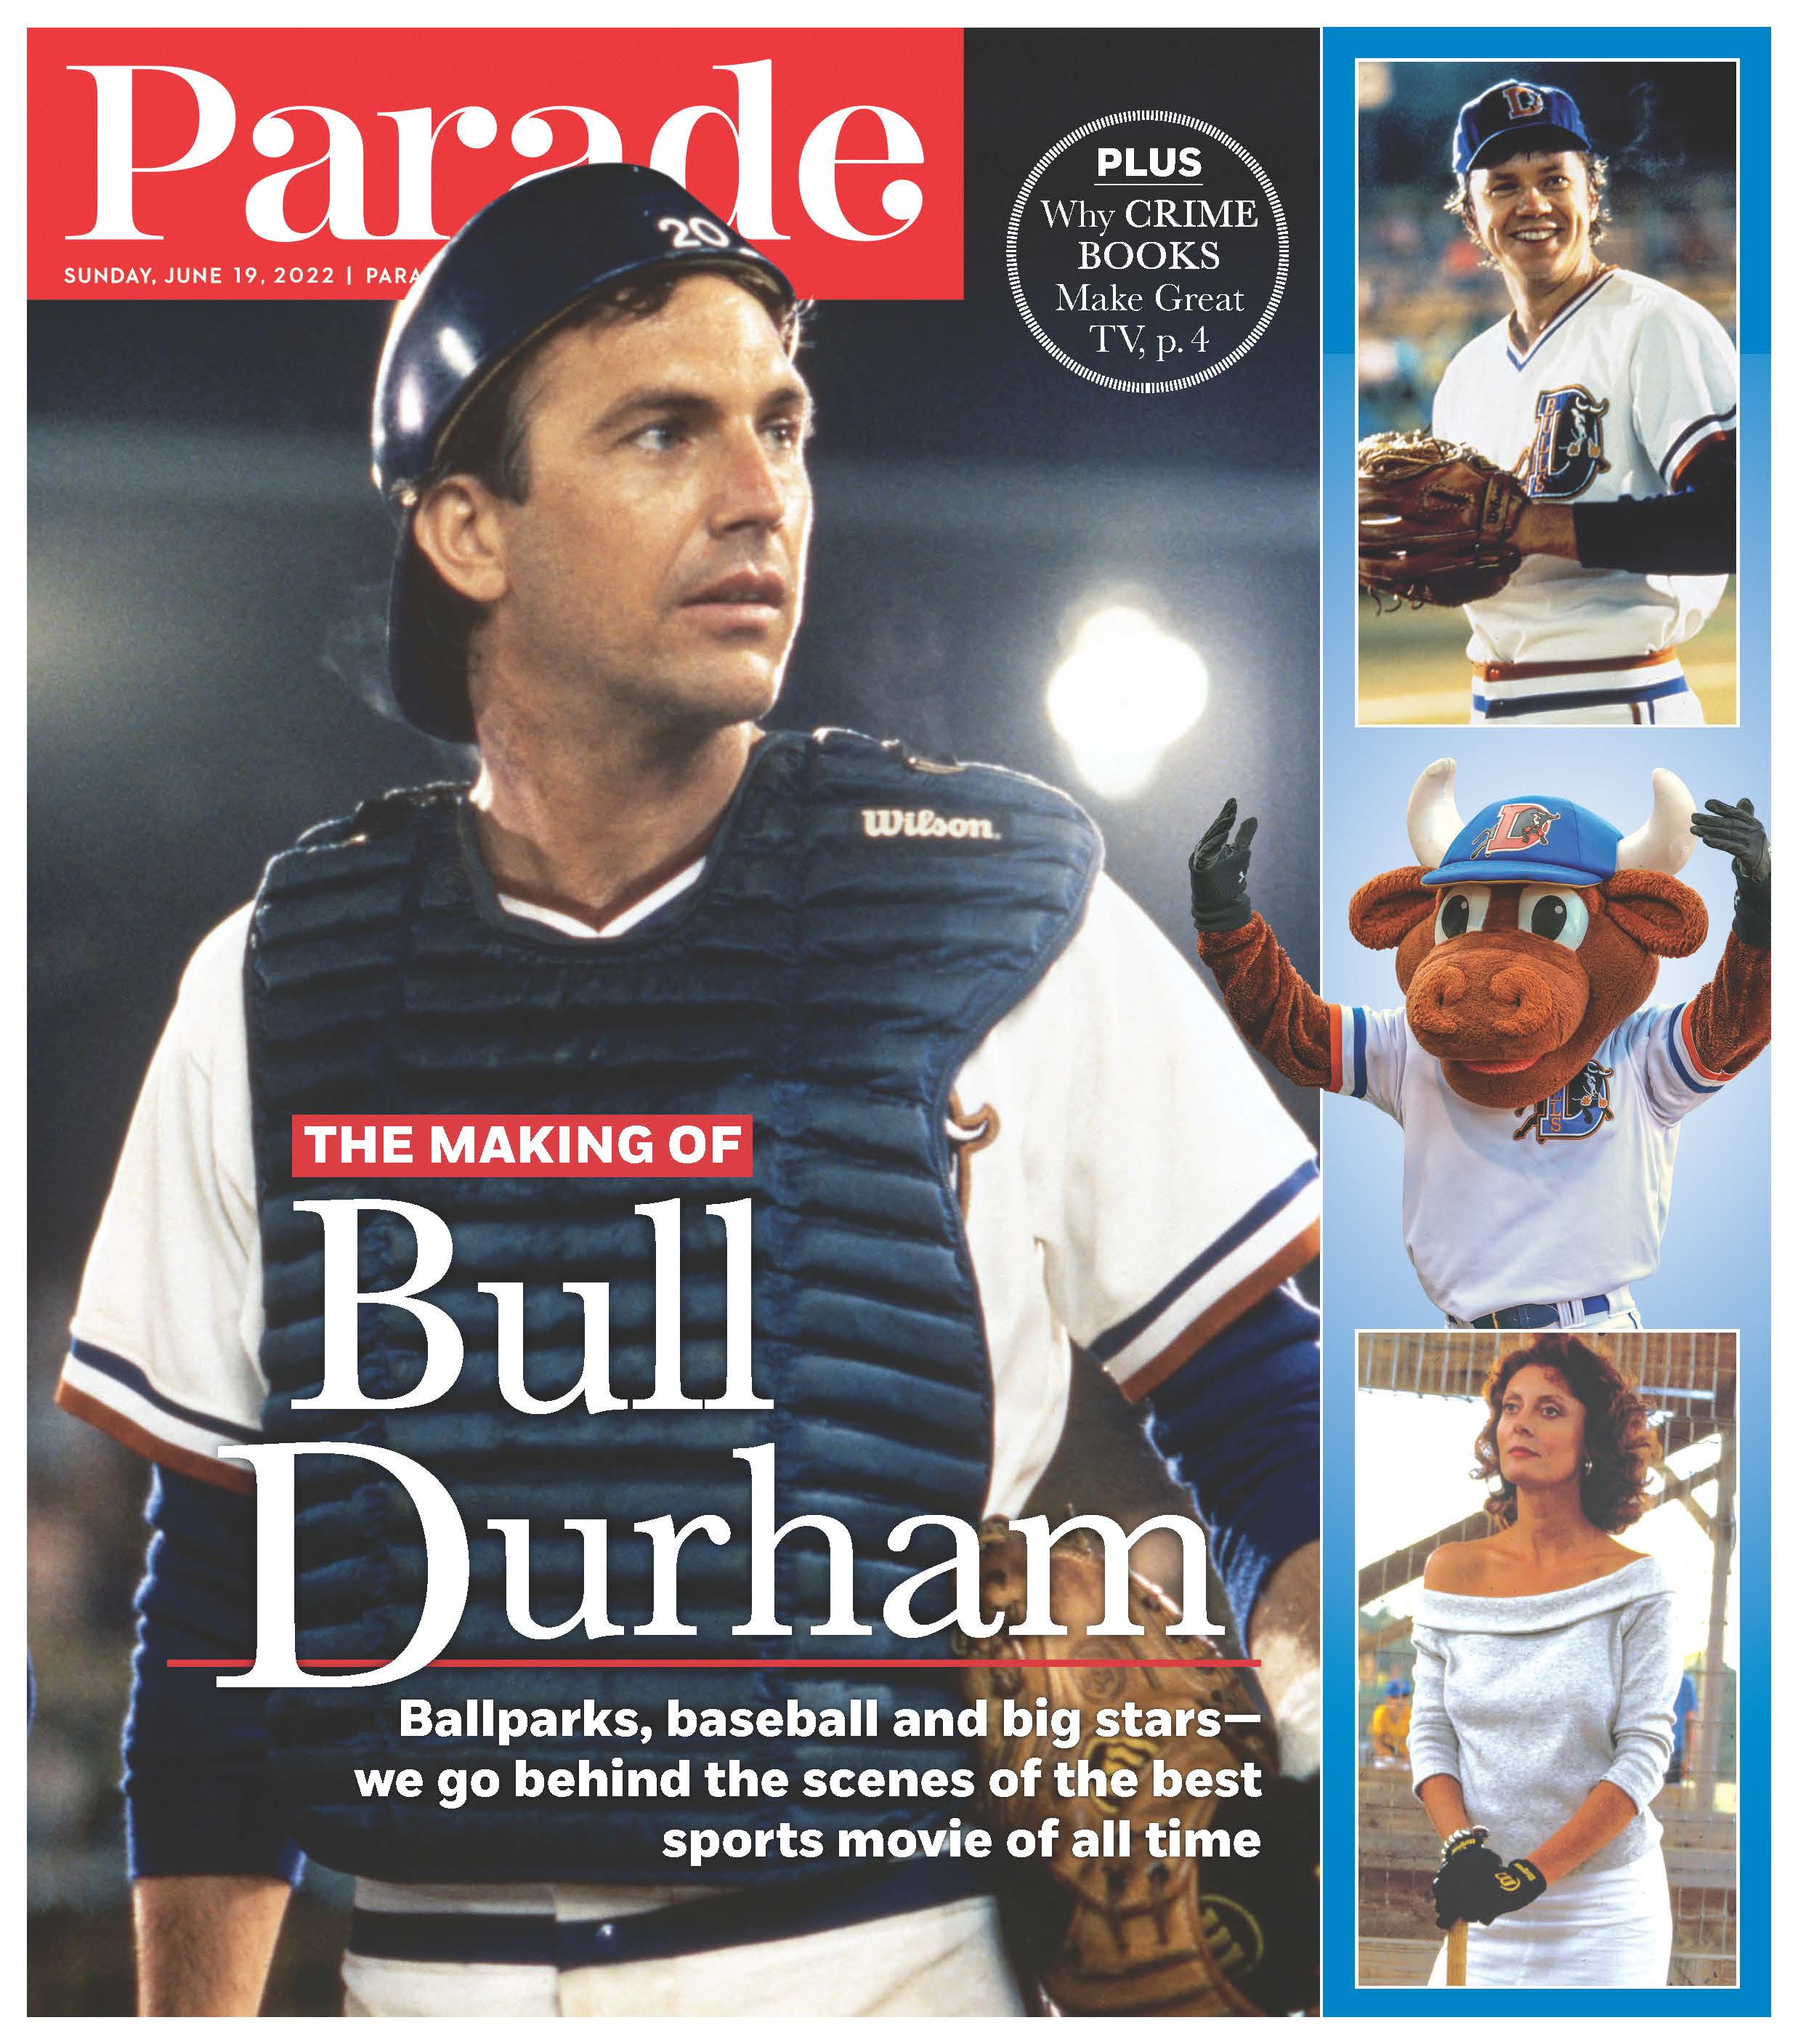 Parade Magazine Cover for Bull Durham